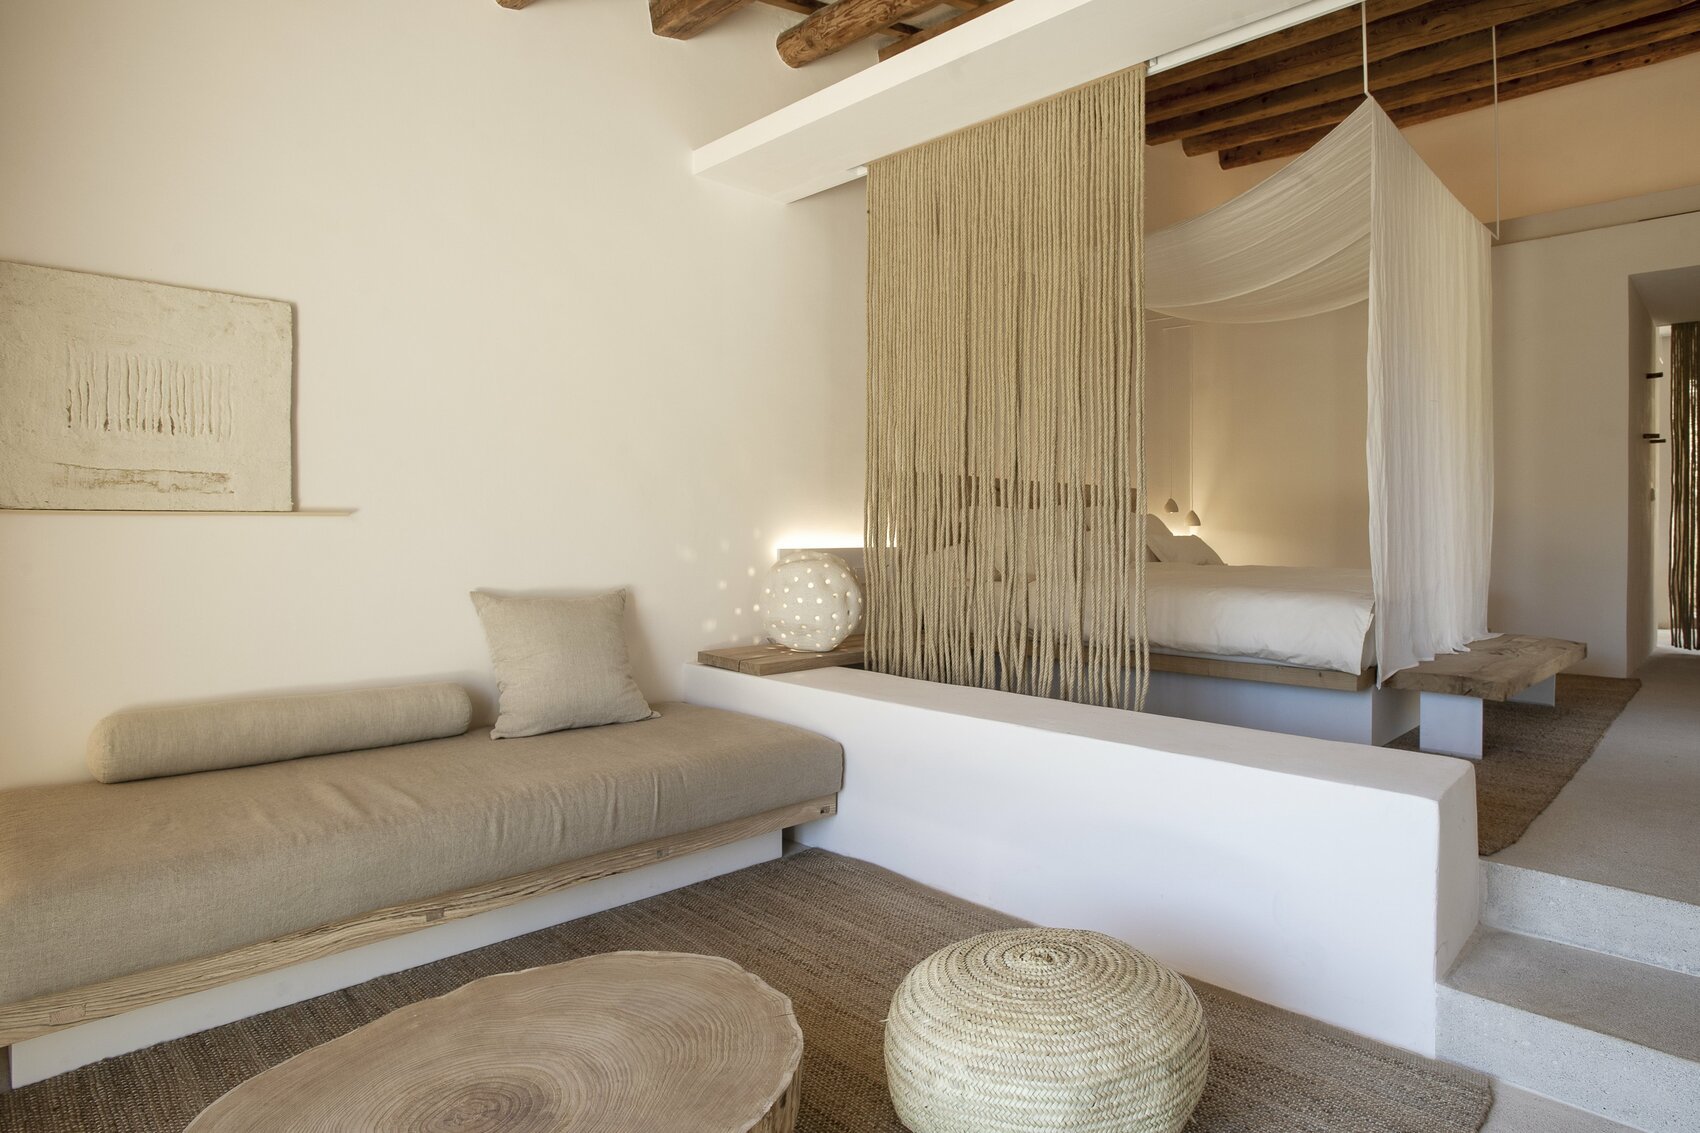 Best luxury eco boutique hotel with pool, spa, restaurant 5* Mallorca Spain - Es Raco d'Arta - exterior